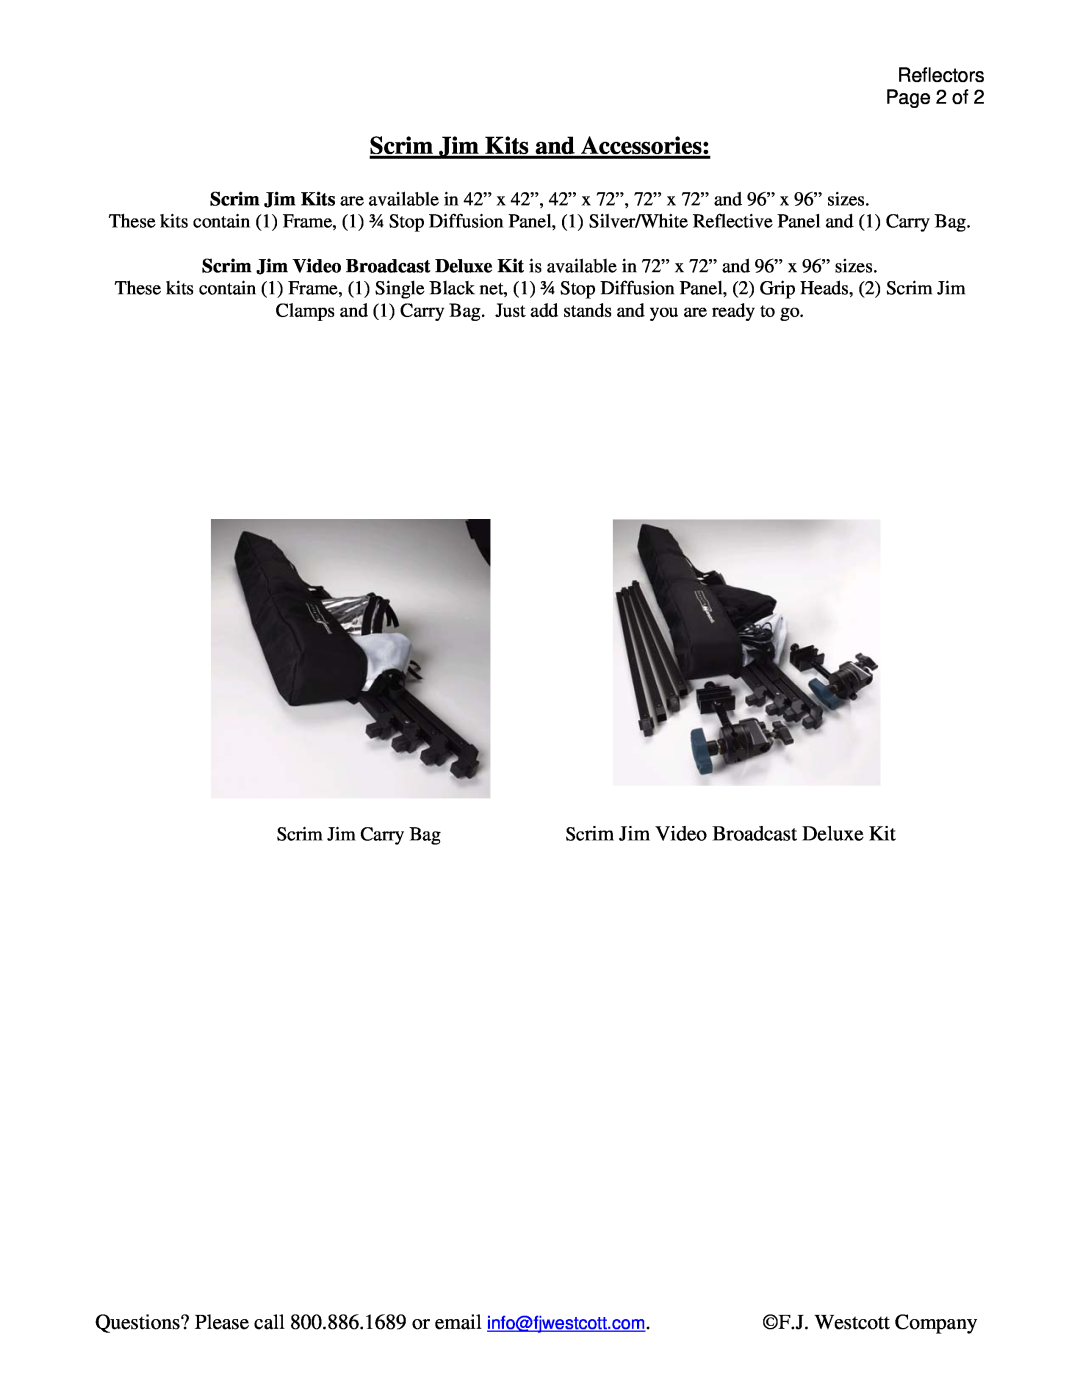 Westcott 1855 manual Scrim Jim Kits and Accessories, Reflectors 